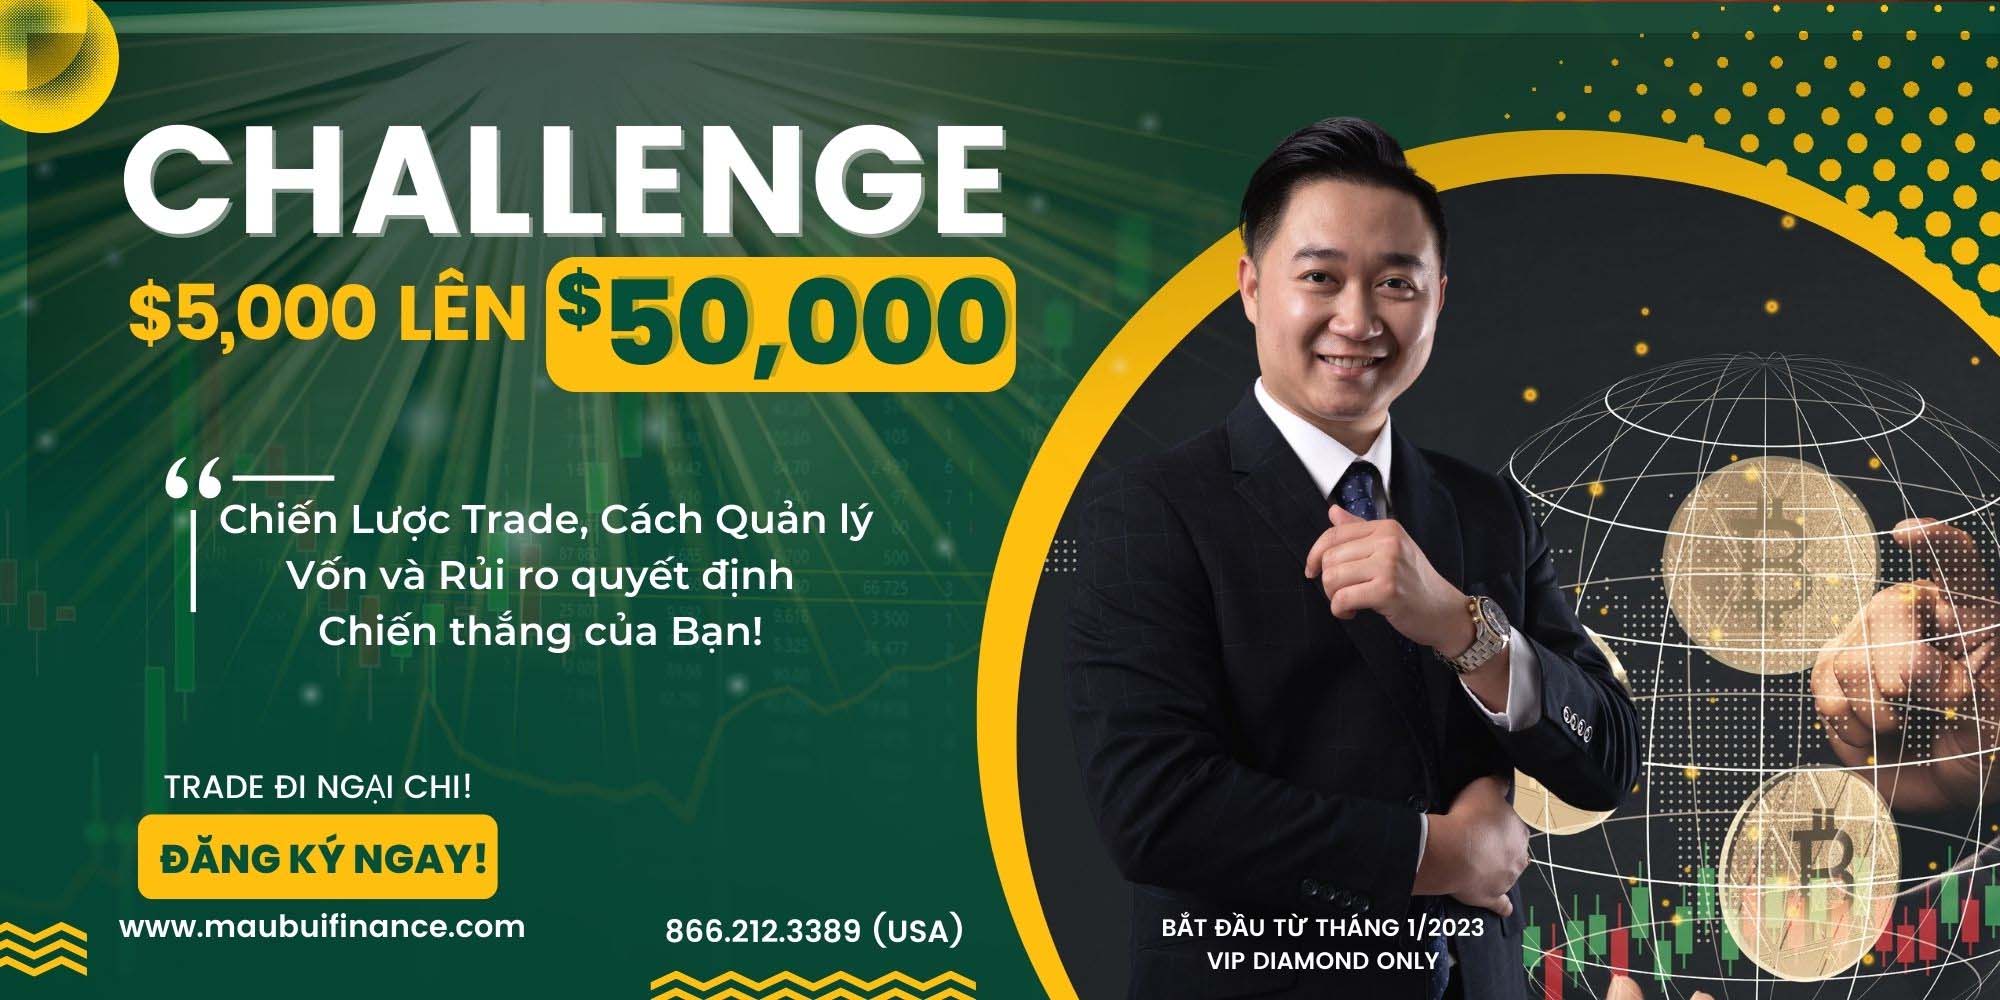 maubuifinance challenge 5000 len 50000 - banner.png